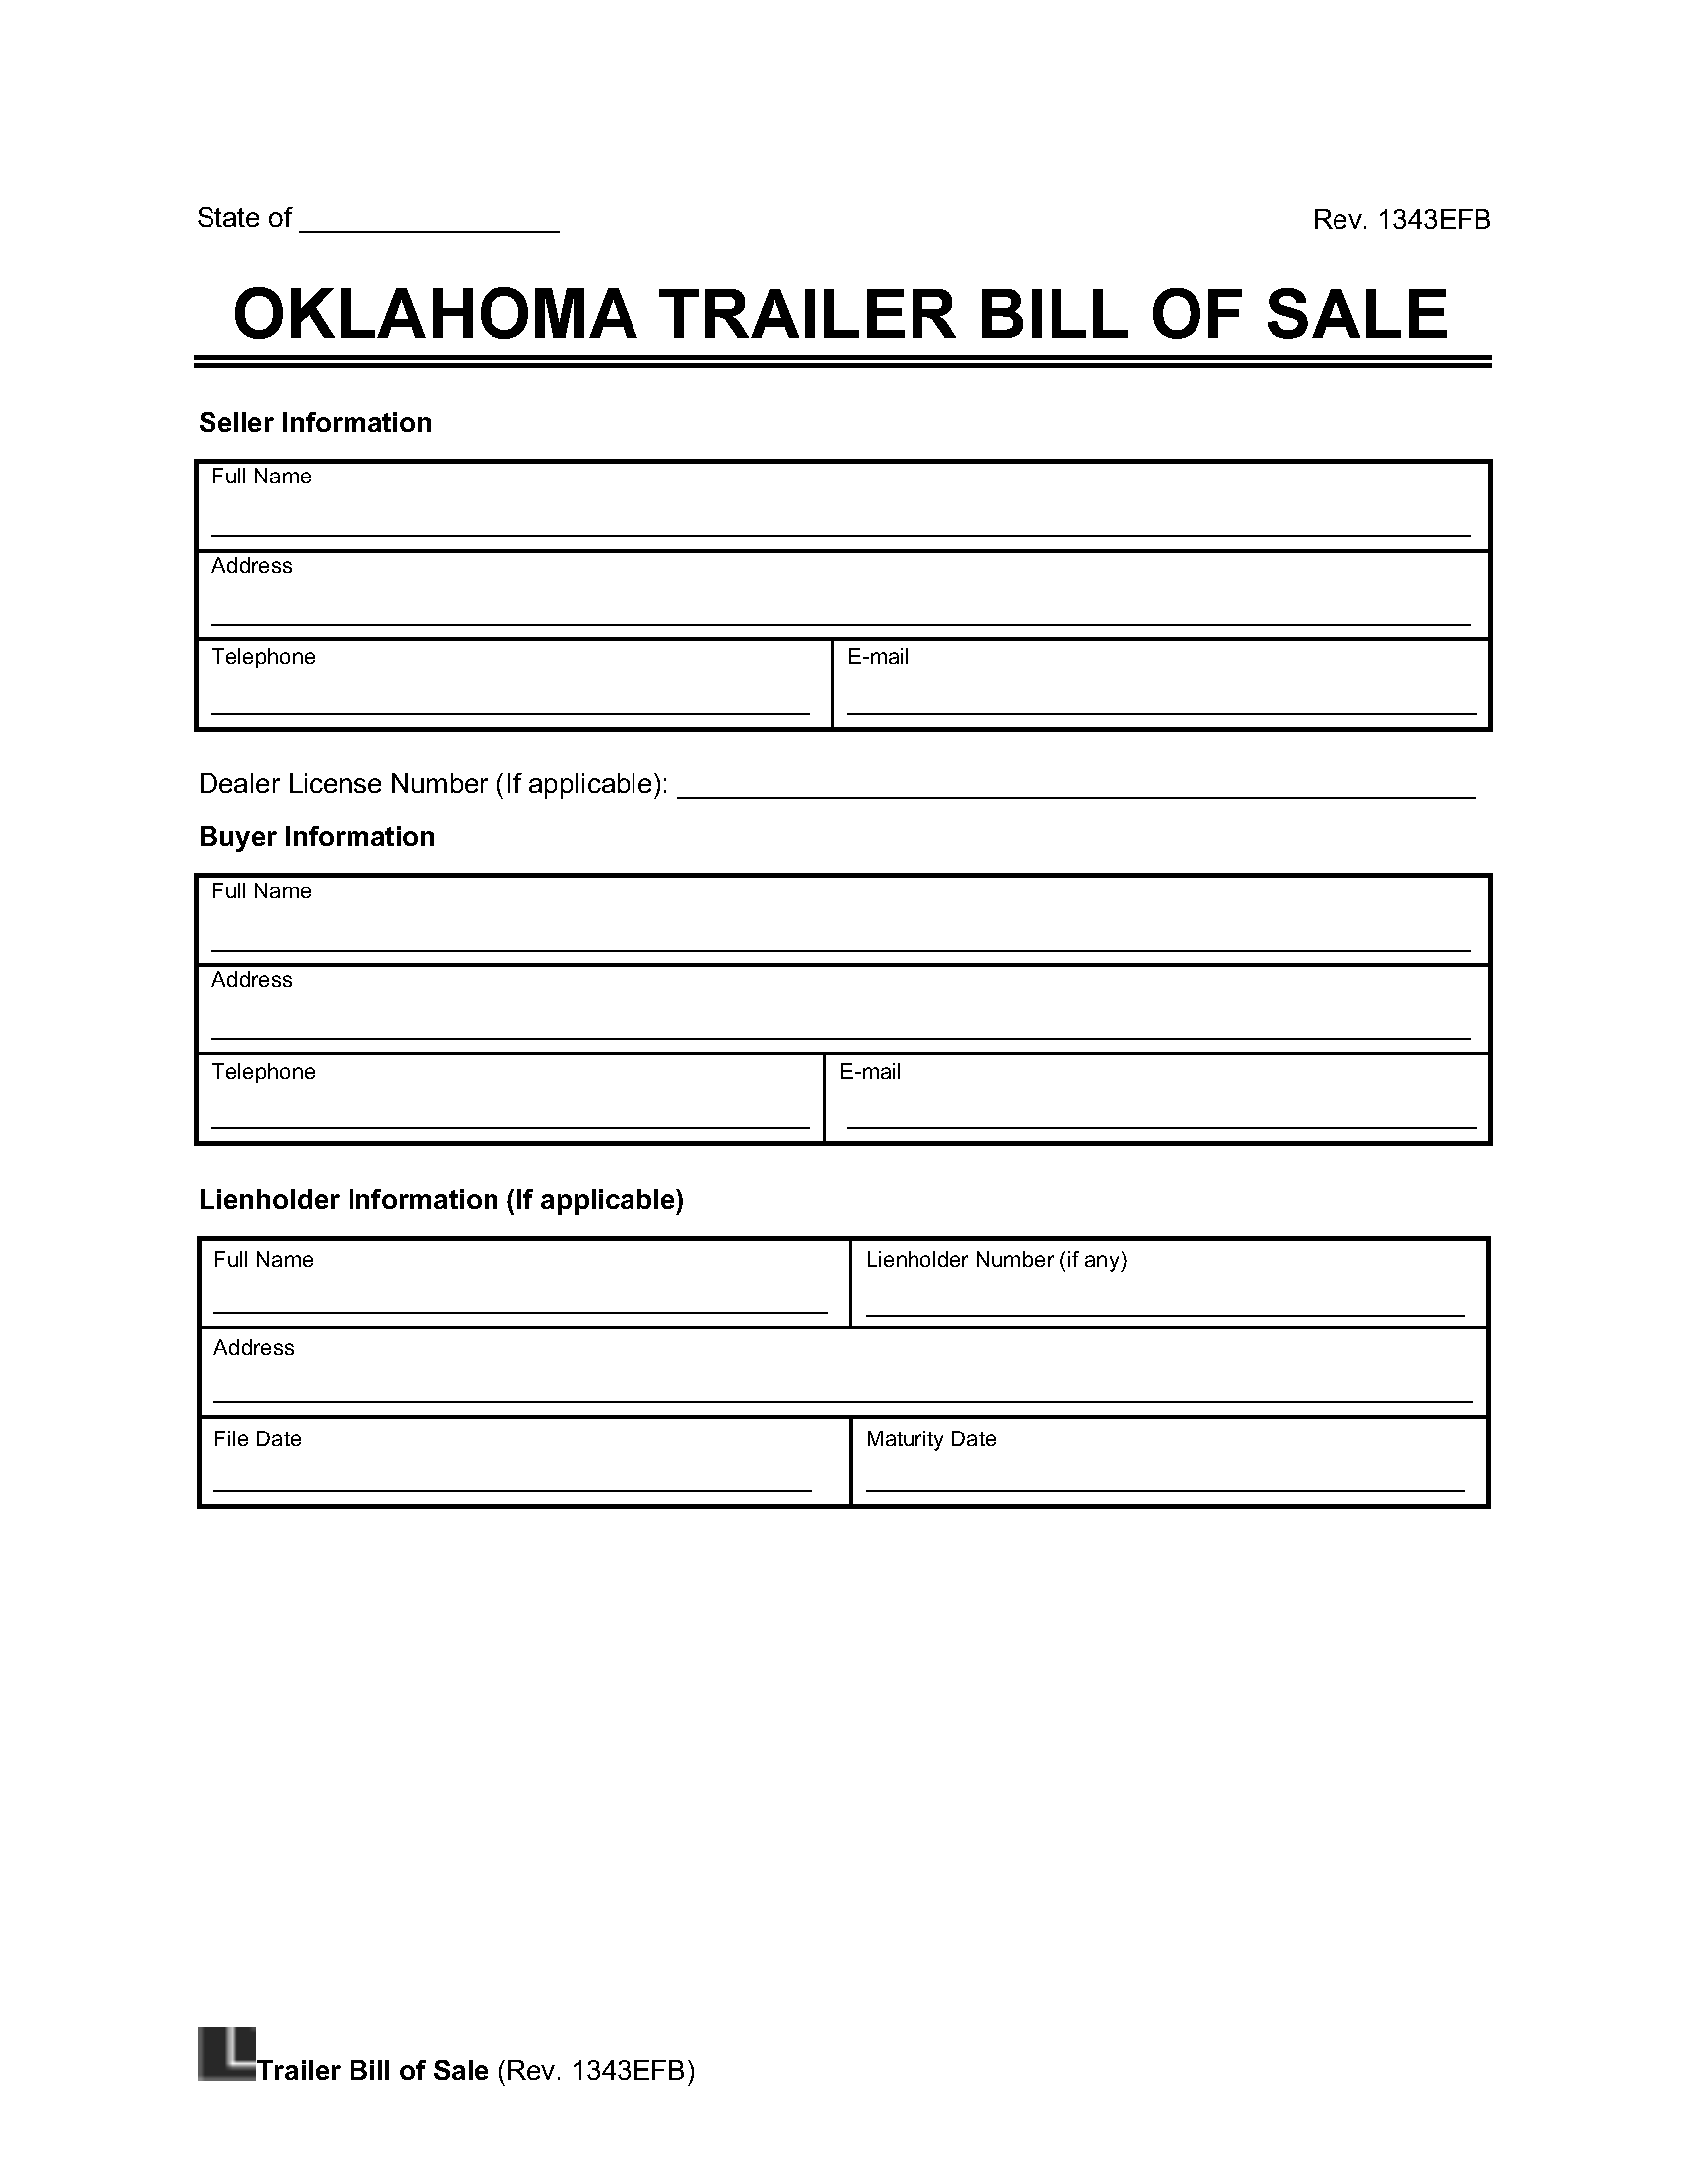 Oklahoma Trailer Bill of Sale screenshot